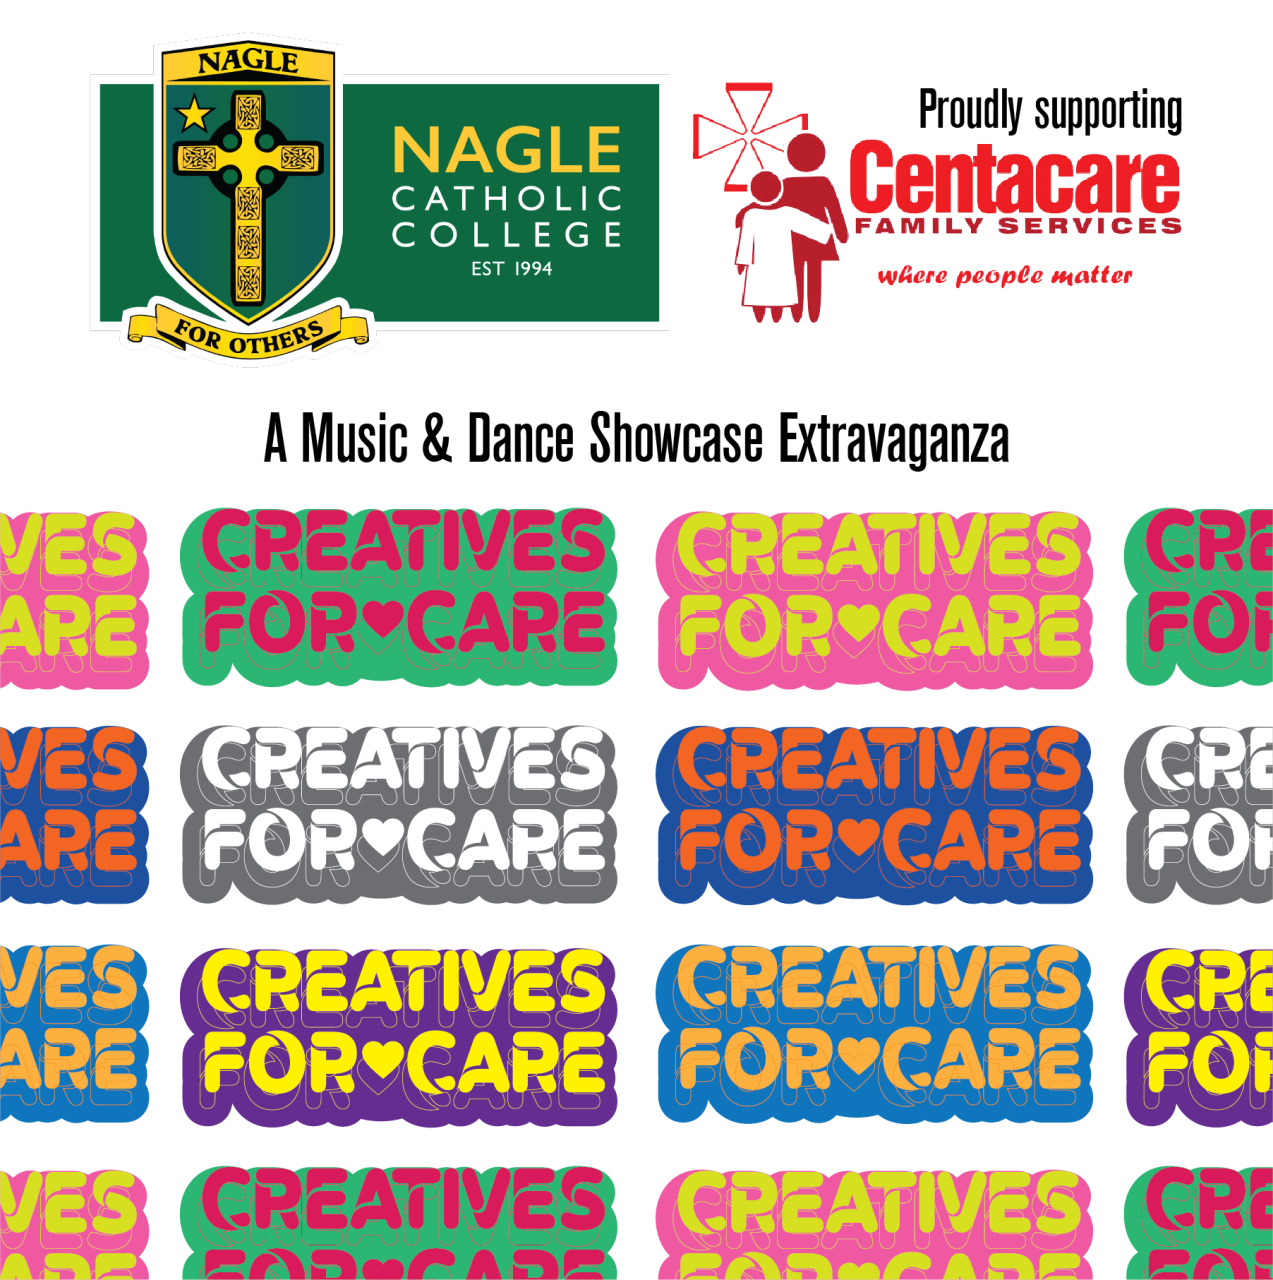 Nagle Catholic College proudly presents CREATIVES FOR CARE showcase